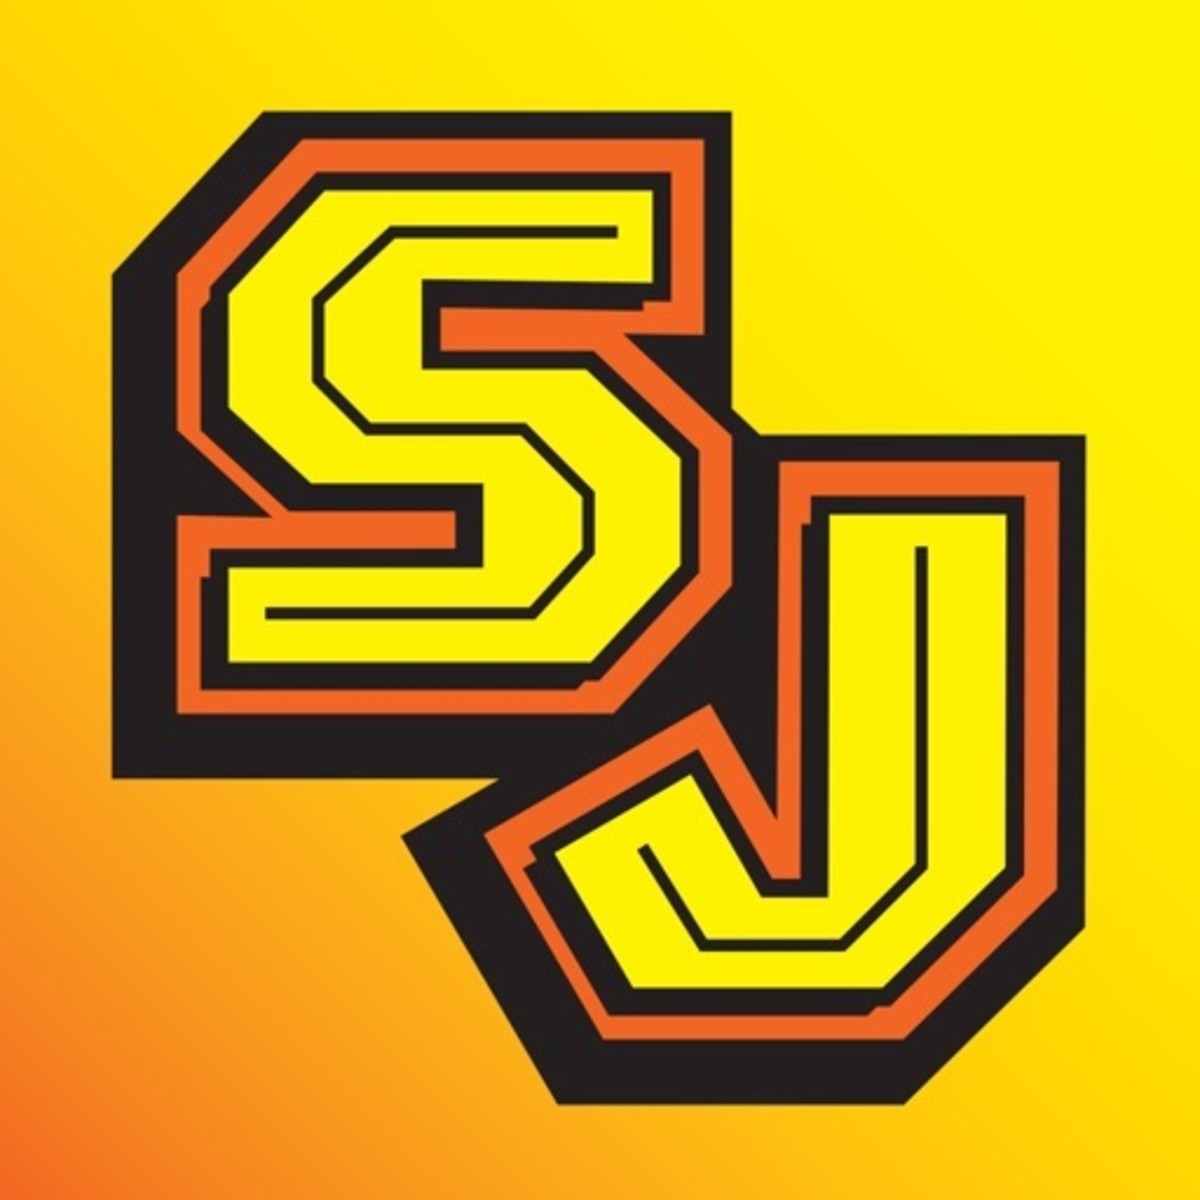 The Shonen Jump manga app logo.